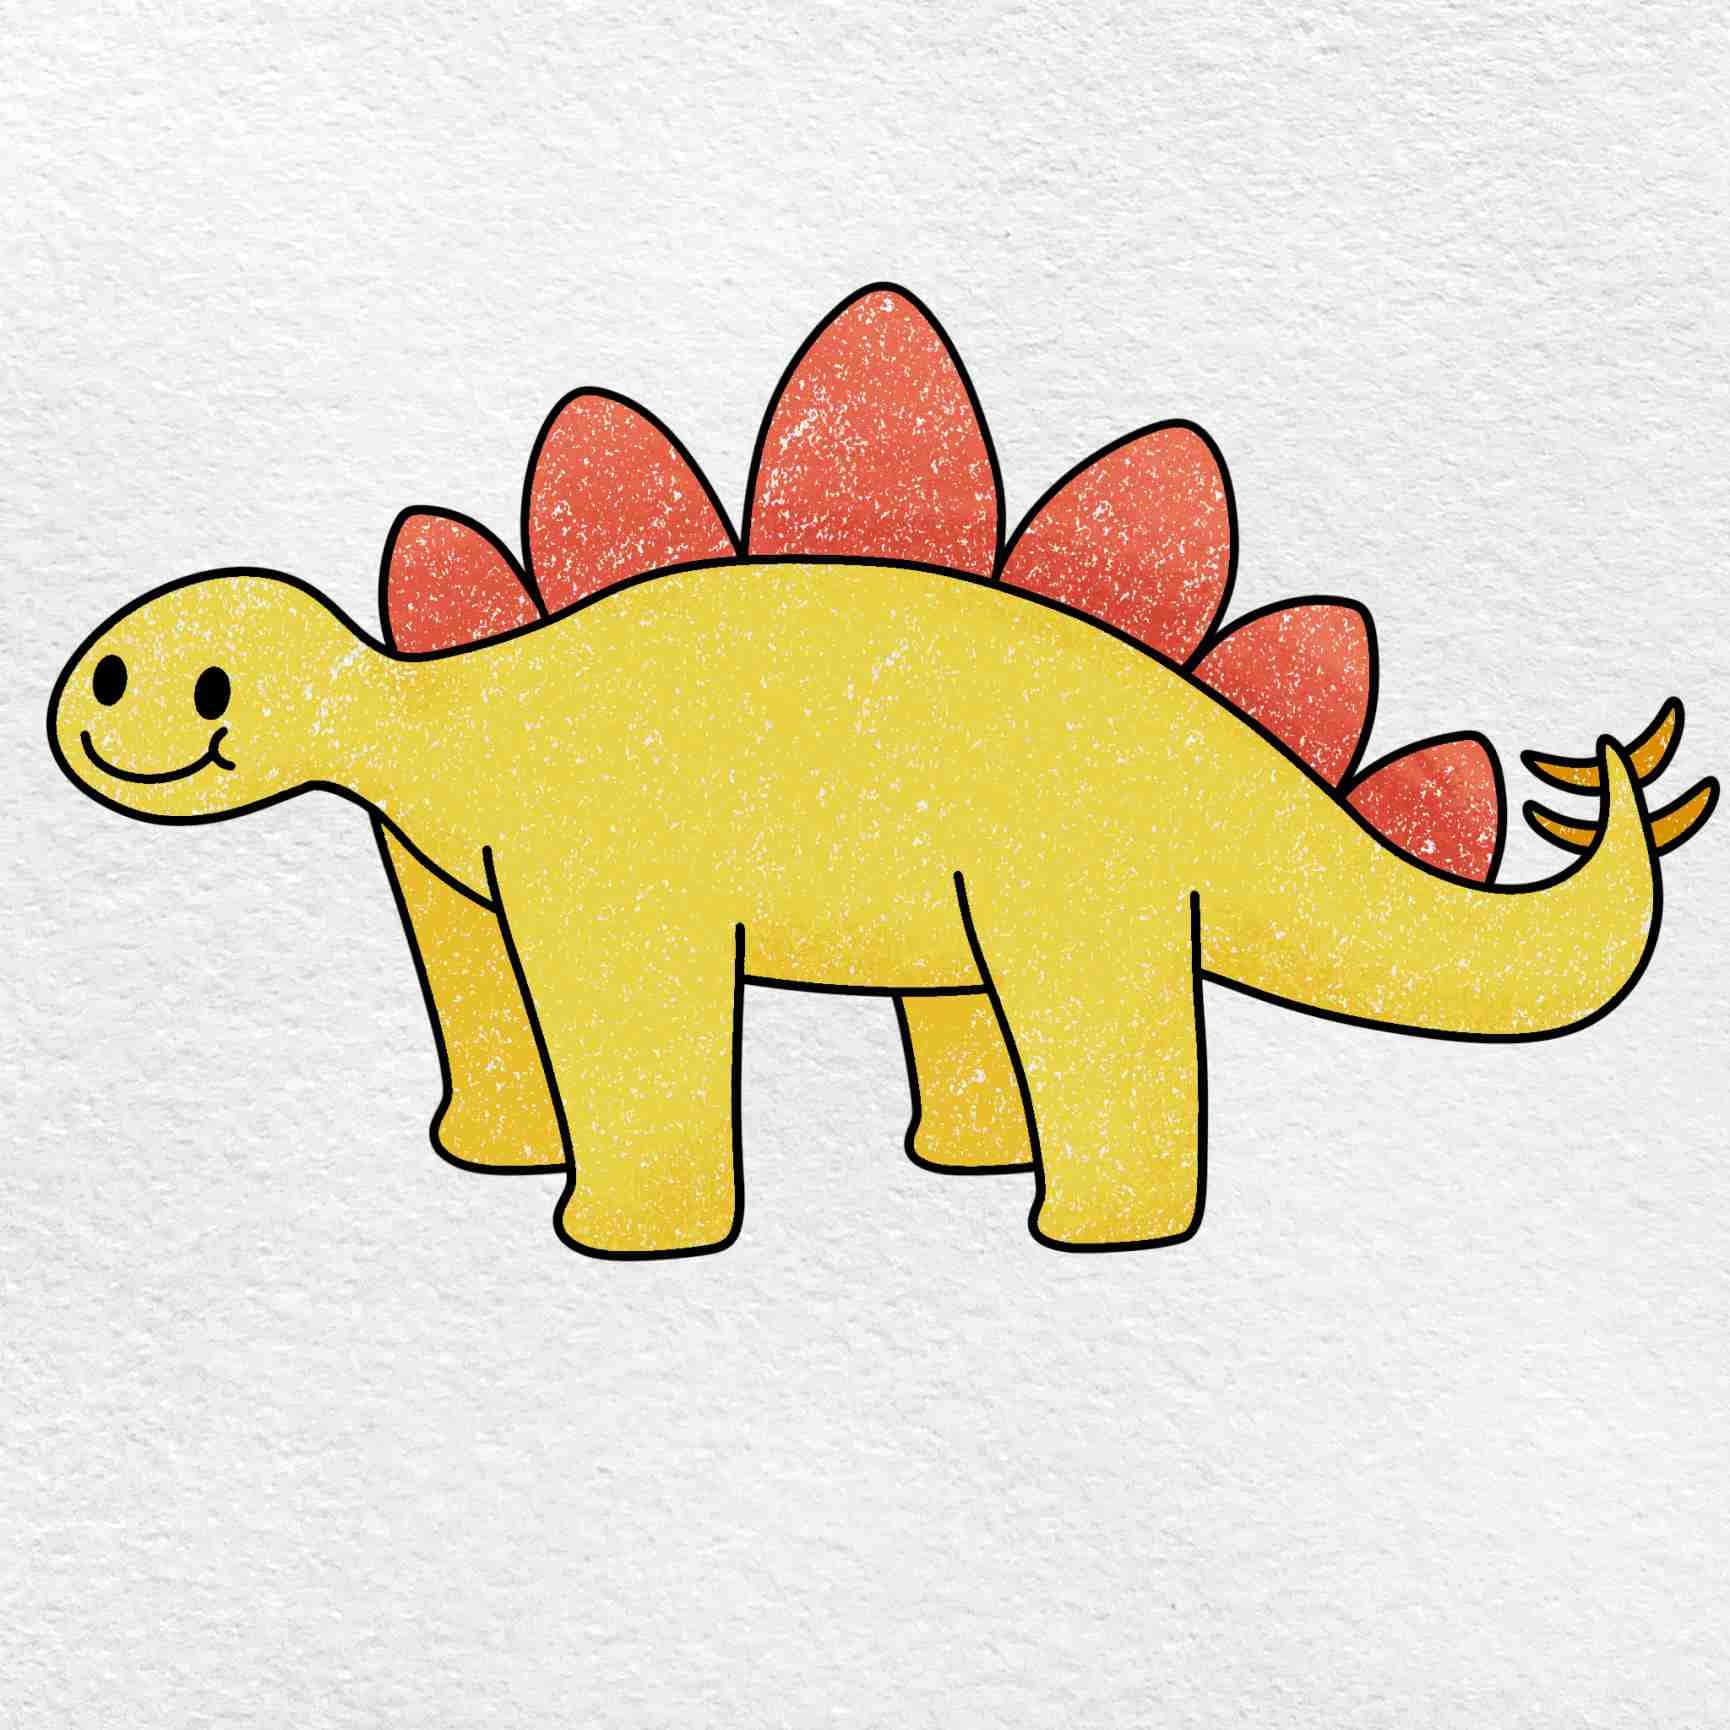 A Cartoon Dinosaur With A Yellow Tail